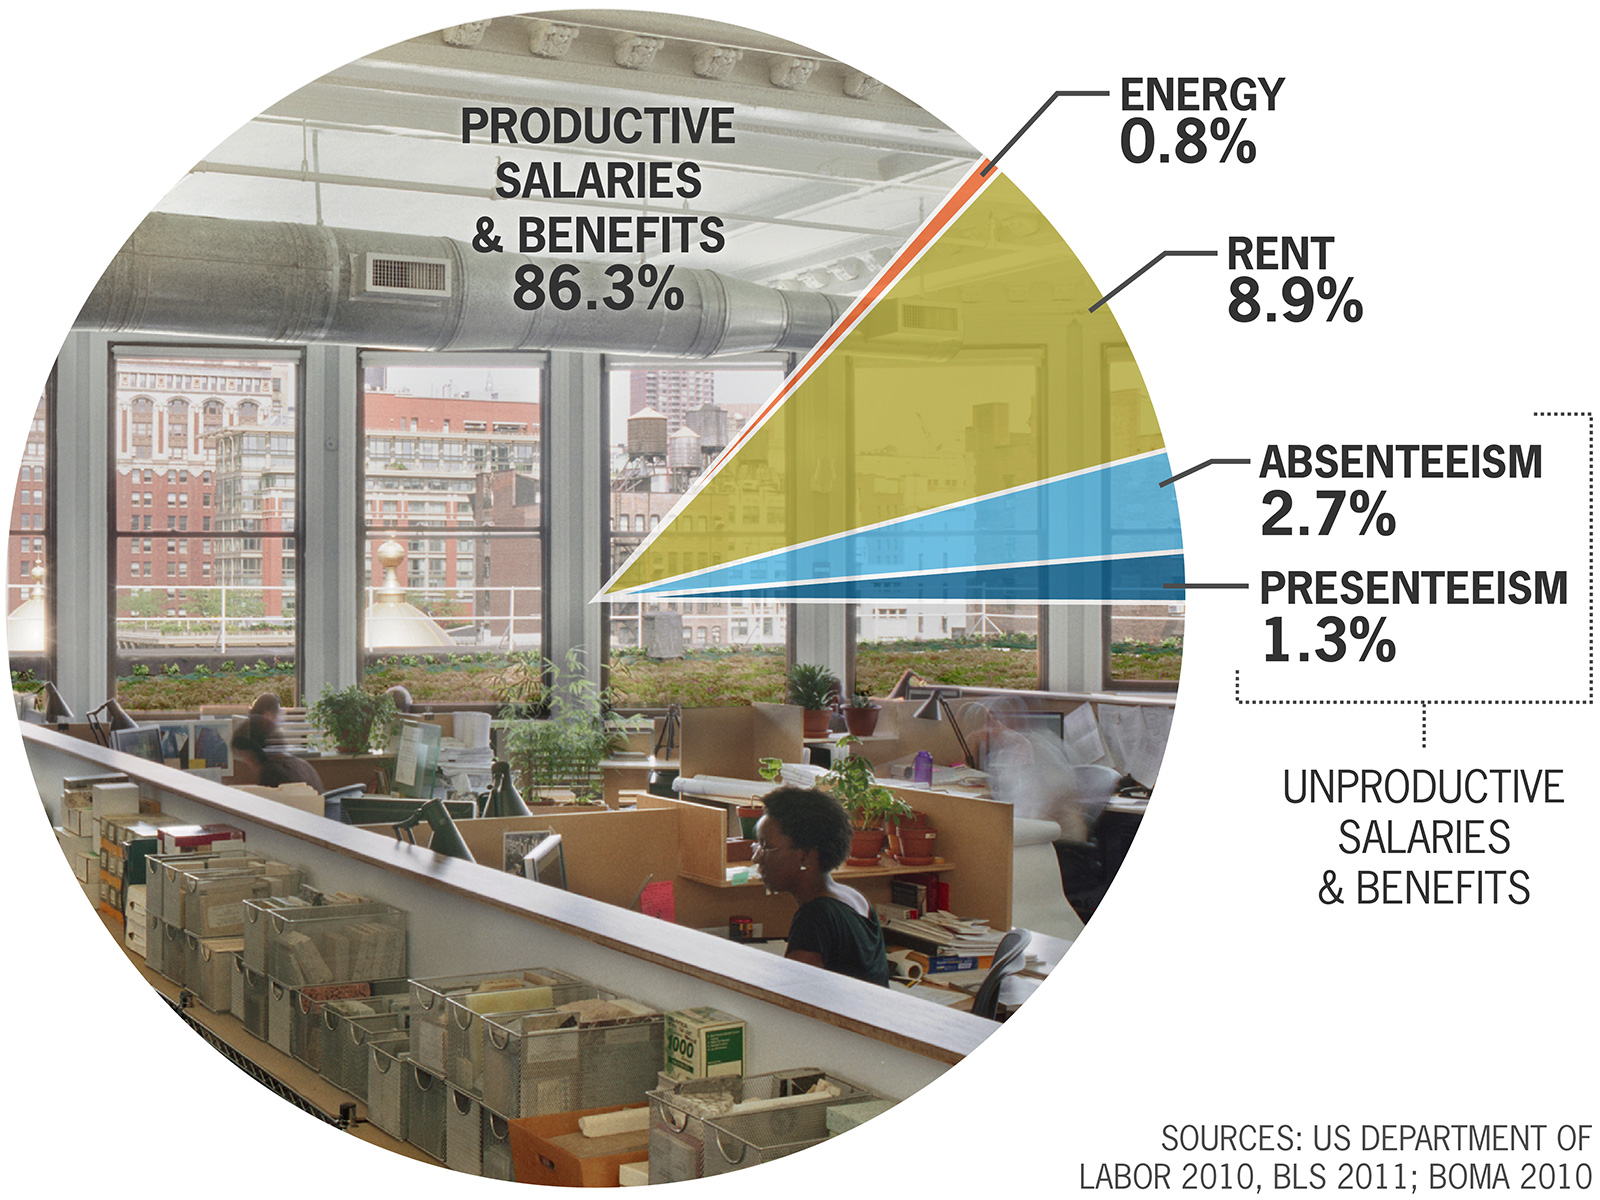 Chart showing: Productive Salaries & Benefits: 86.3%; Energy: .8%; Rent: 8.9%; Unproductive Salaries & Benefits: 4% (2.7% Absenteeisn, 1.3% Presenteeism).